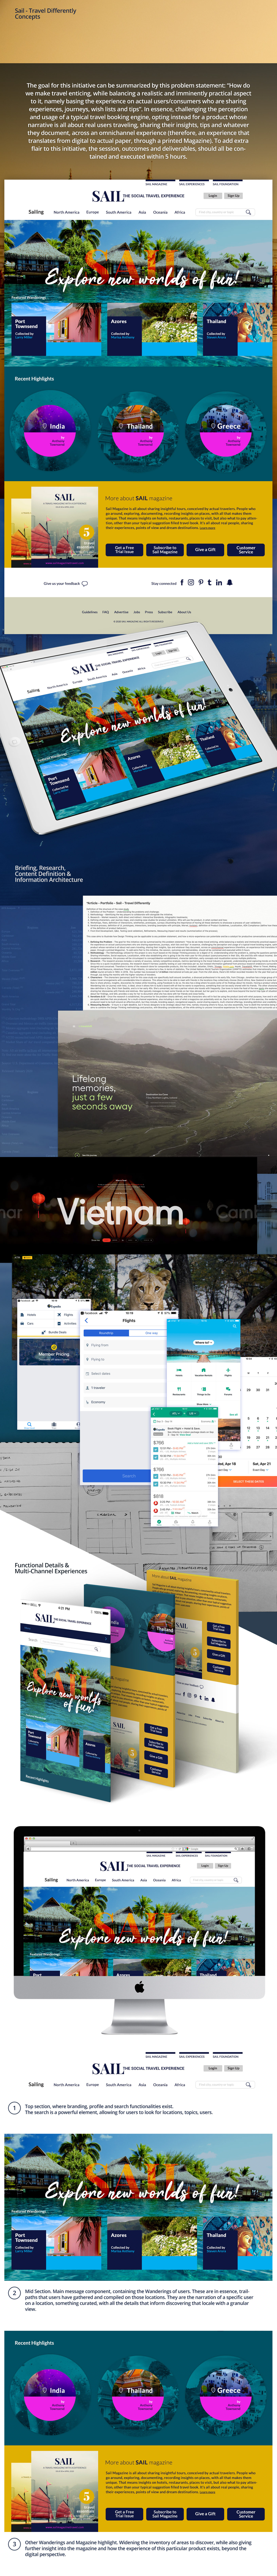 Booking interaction interactive multiplatform omnichannel sharing social Travel UX design